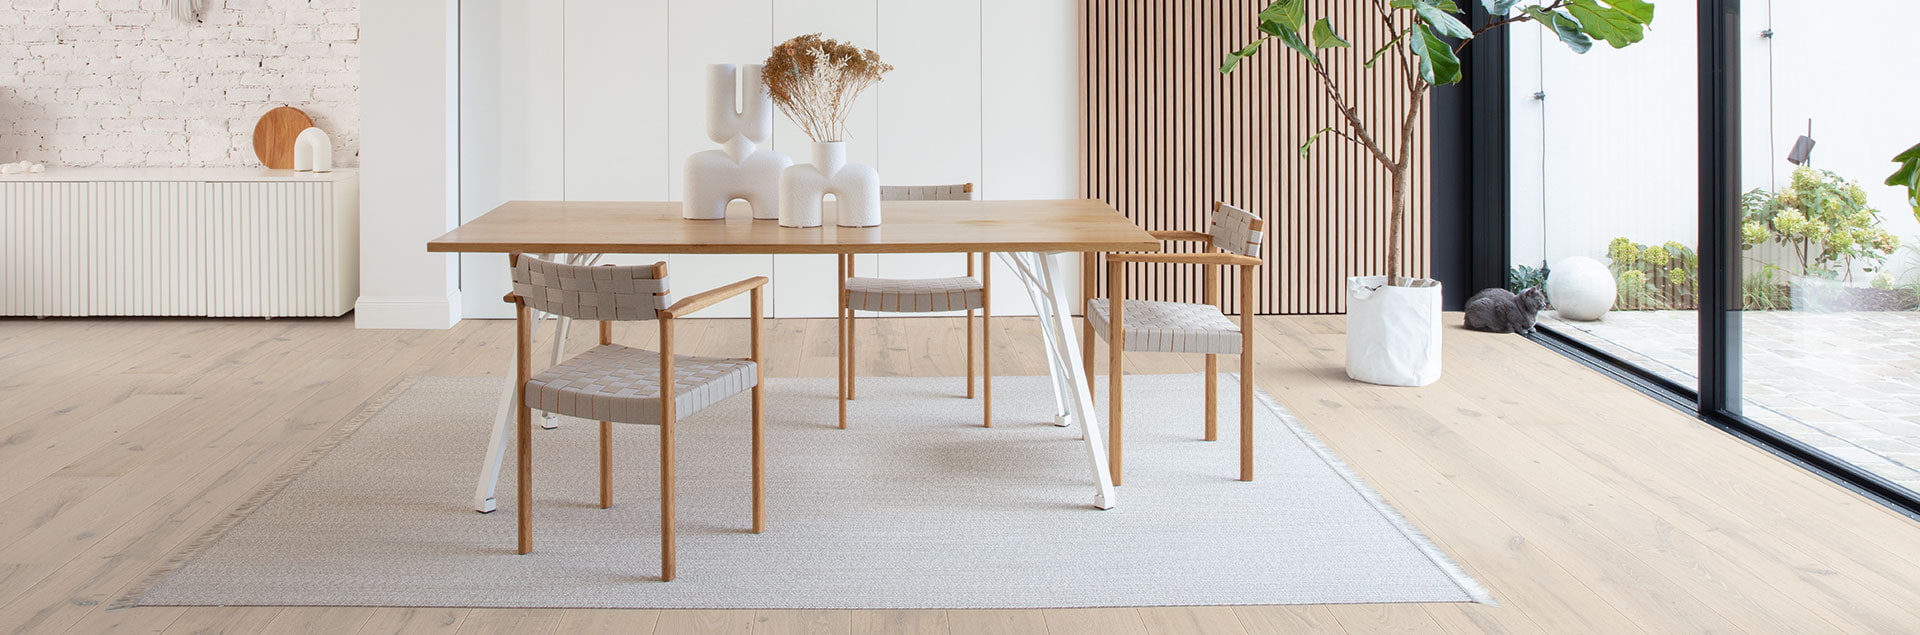 quick-step parquet japandi style floor